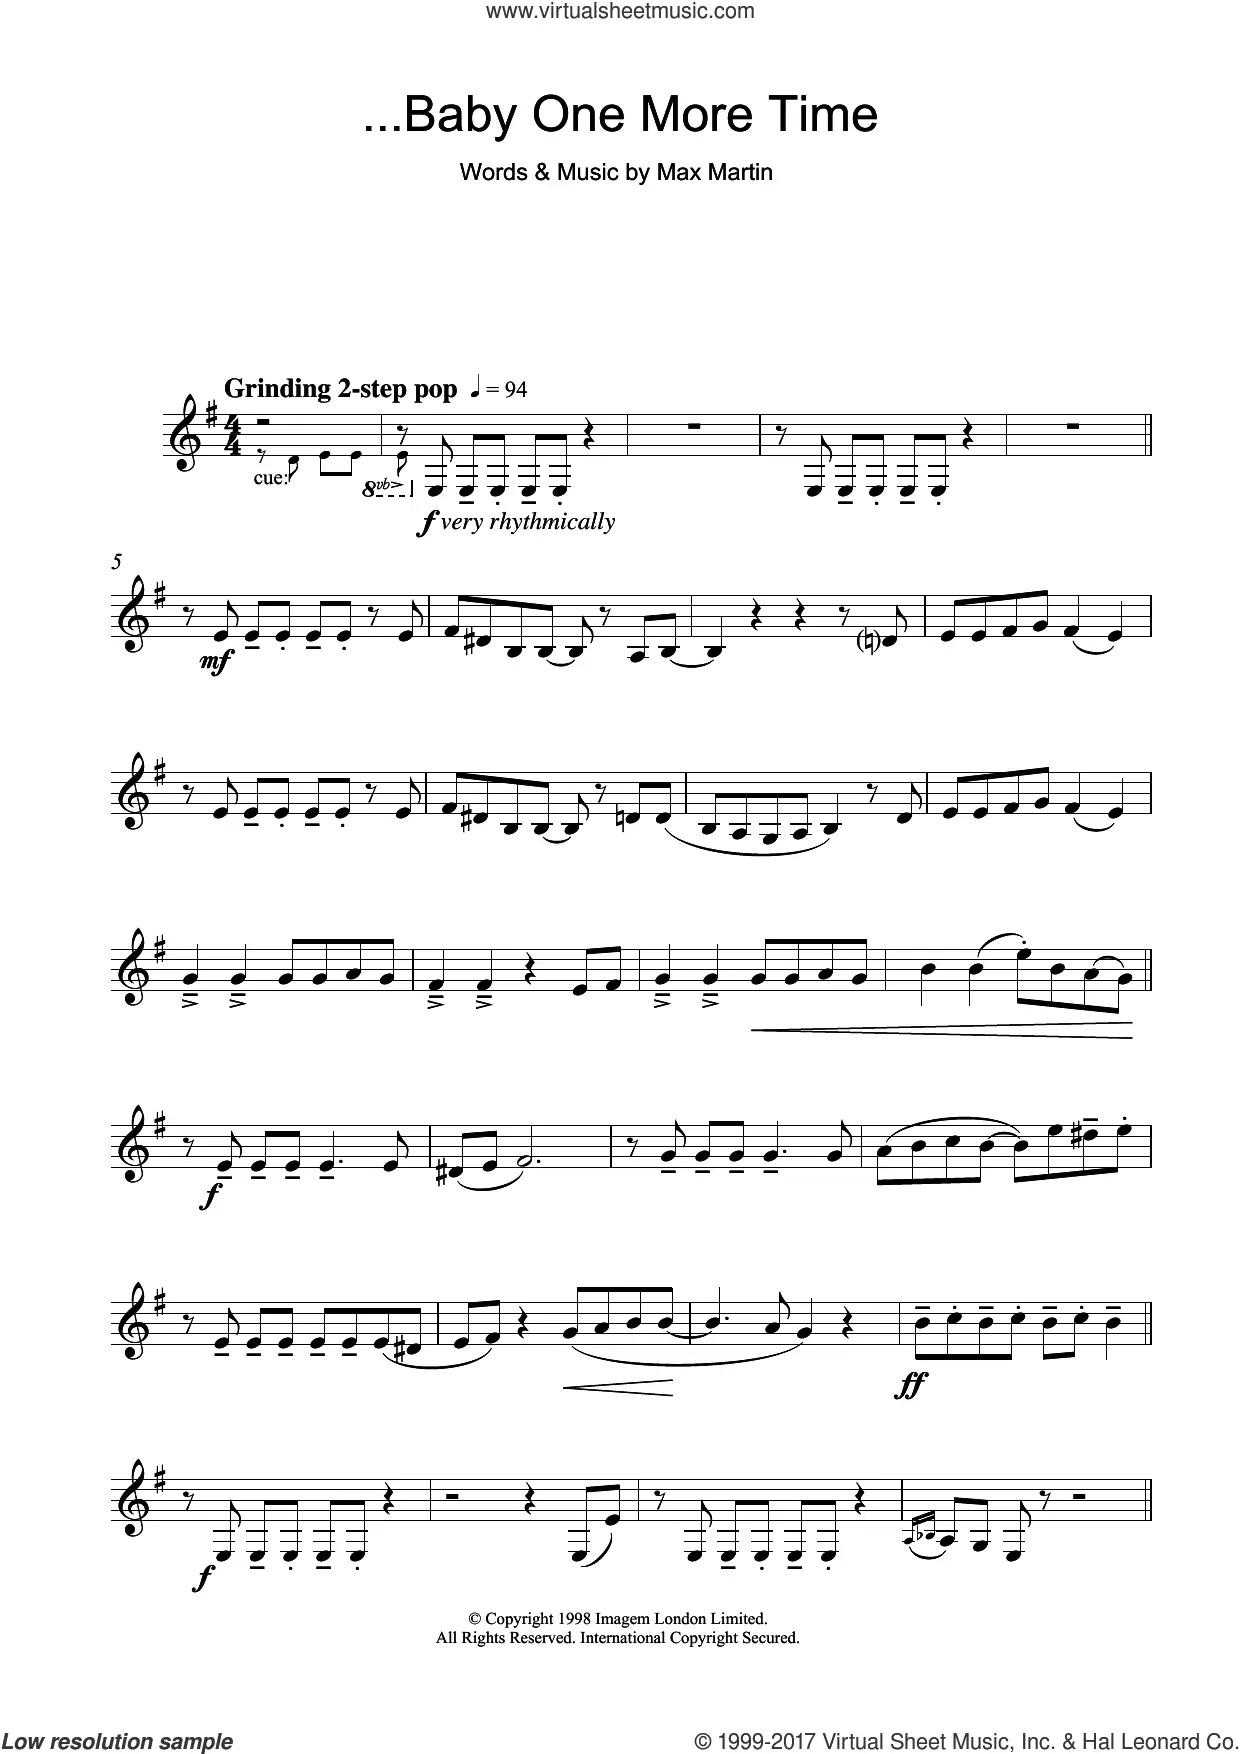 clarinet sheet music pop easy